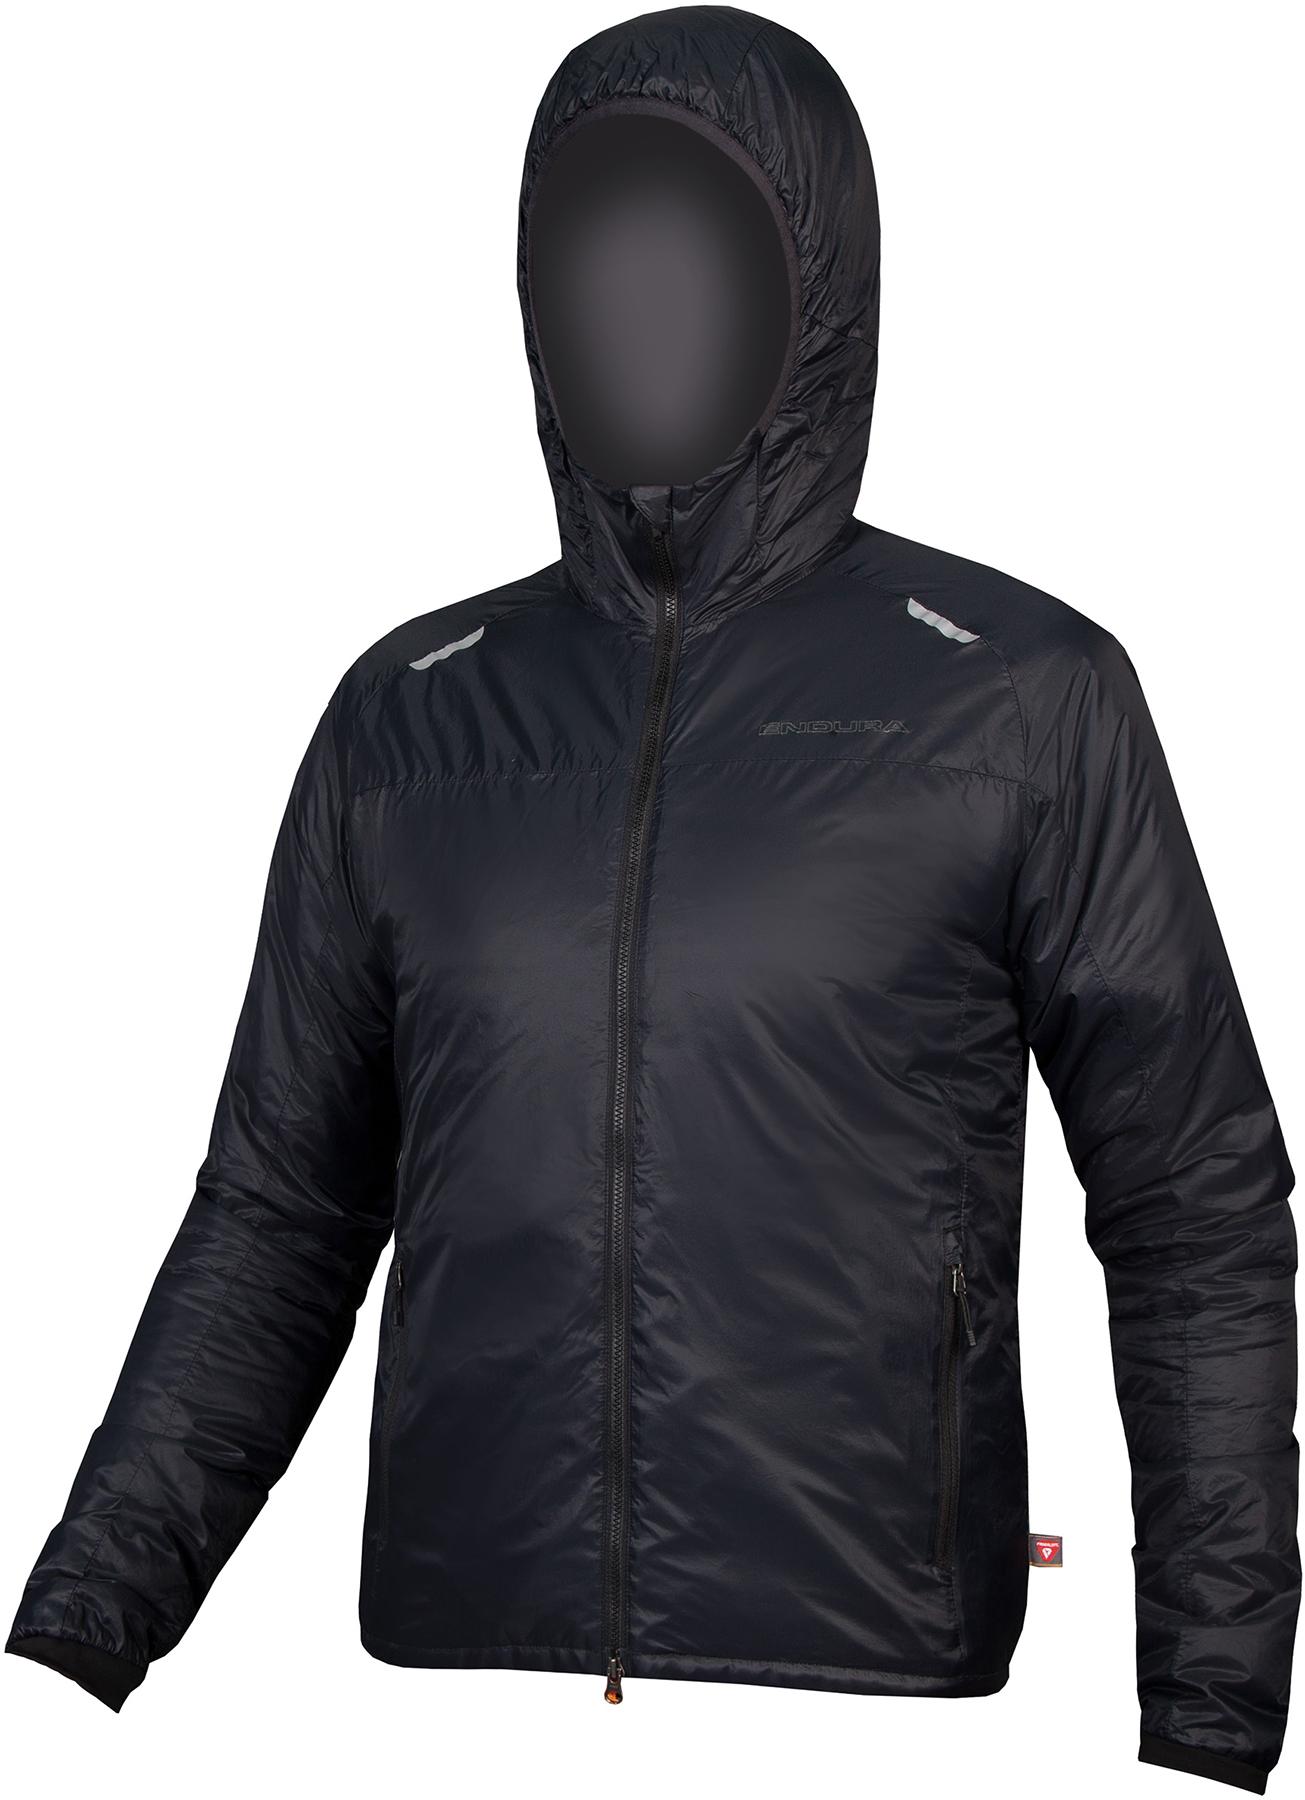 Endura Gv500 Insulated Jacket  Black